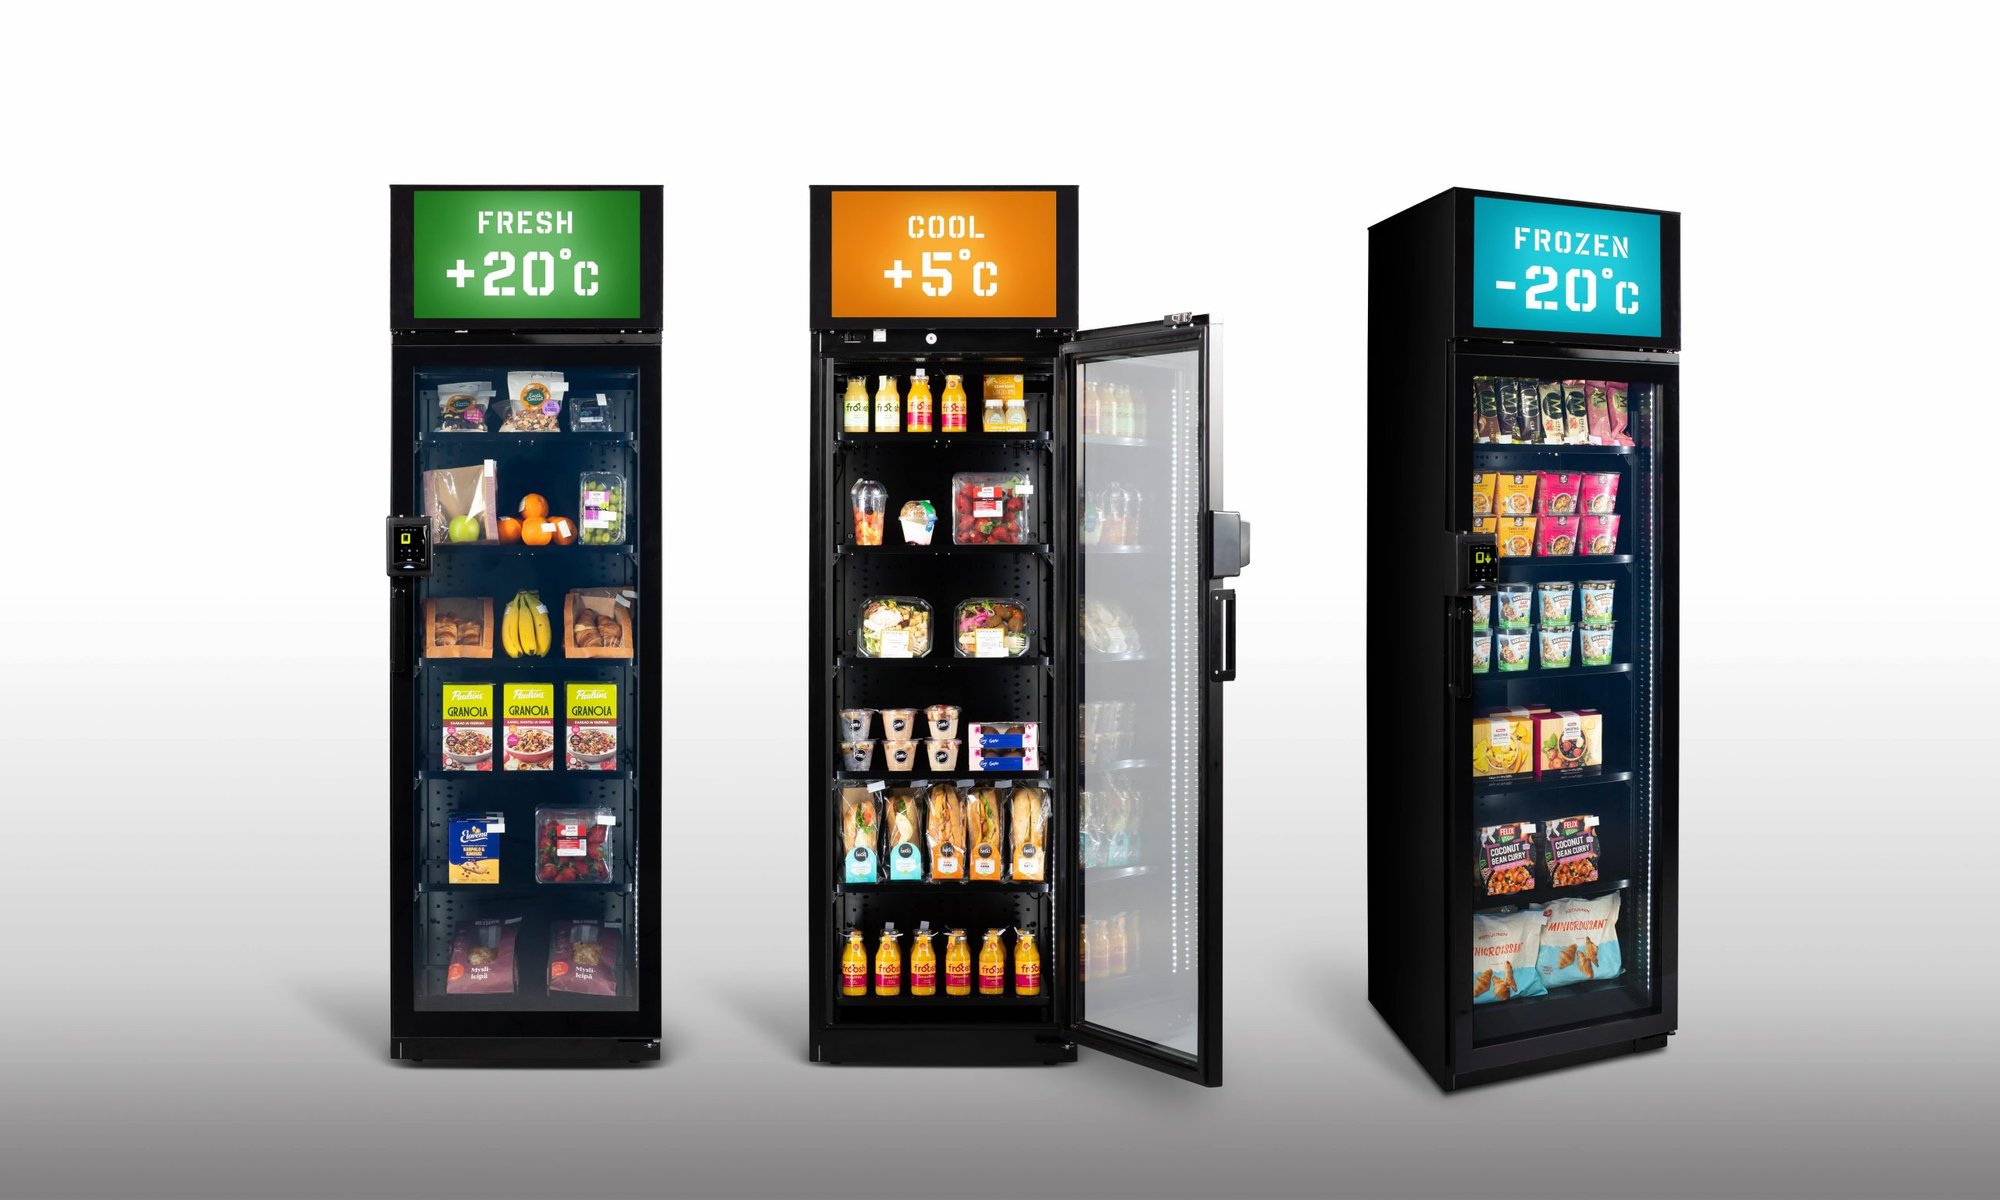 Smart vending fridge and smart vending freezer